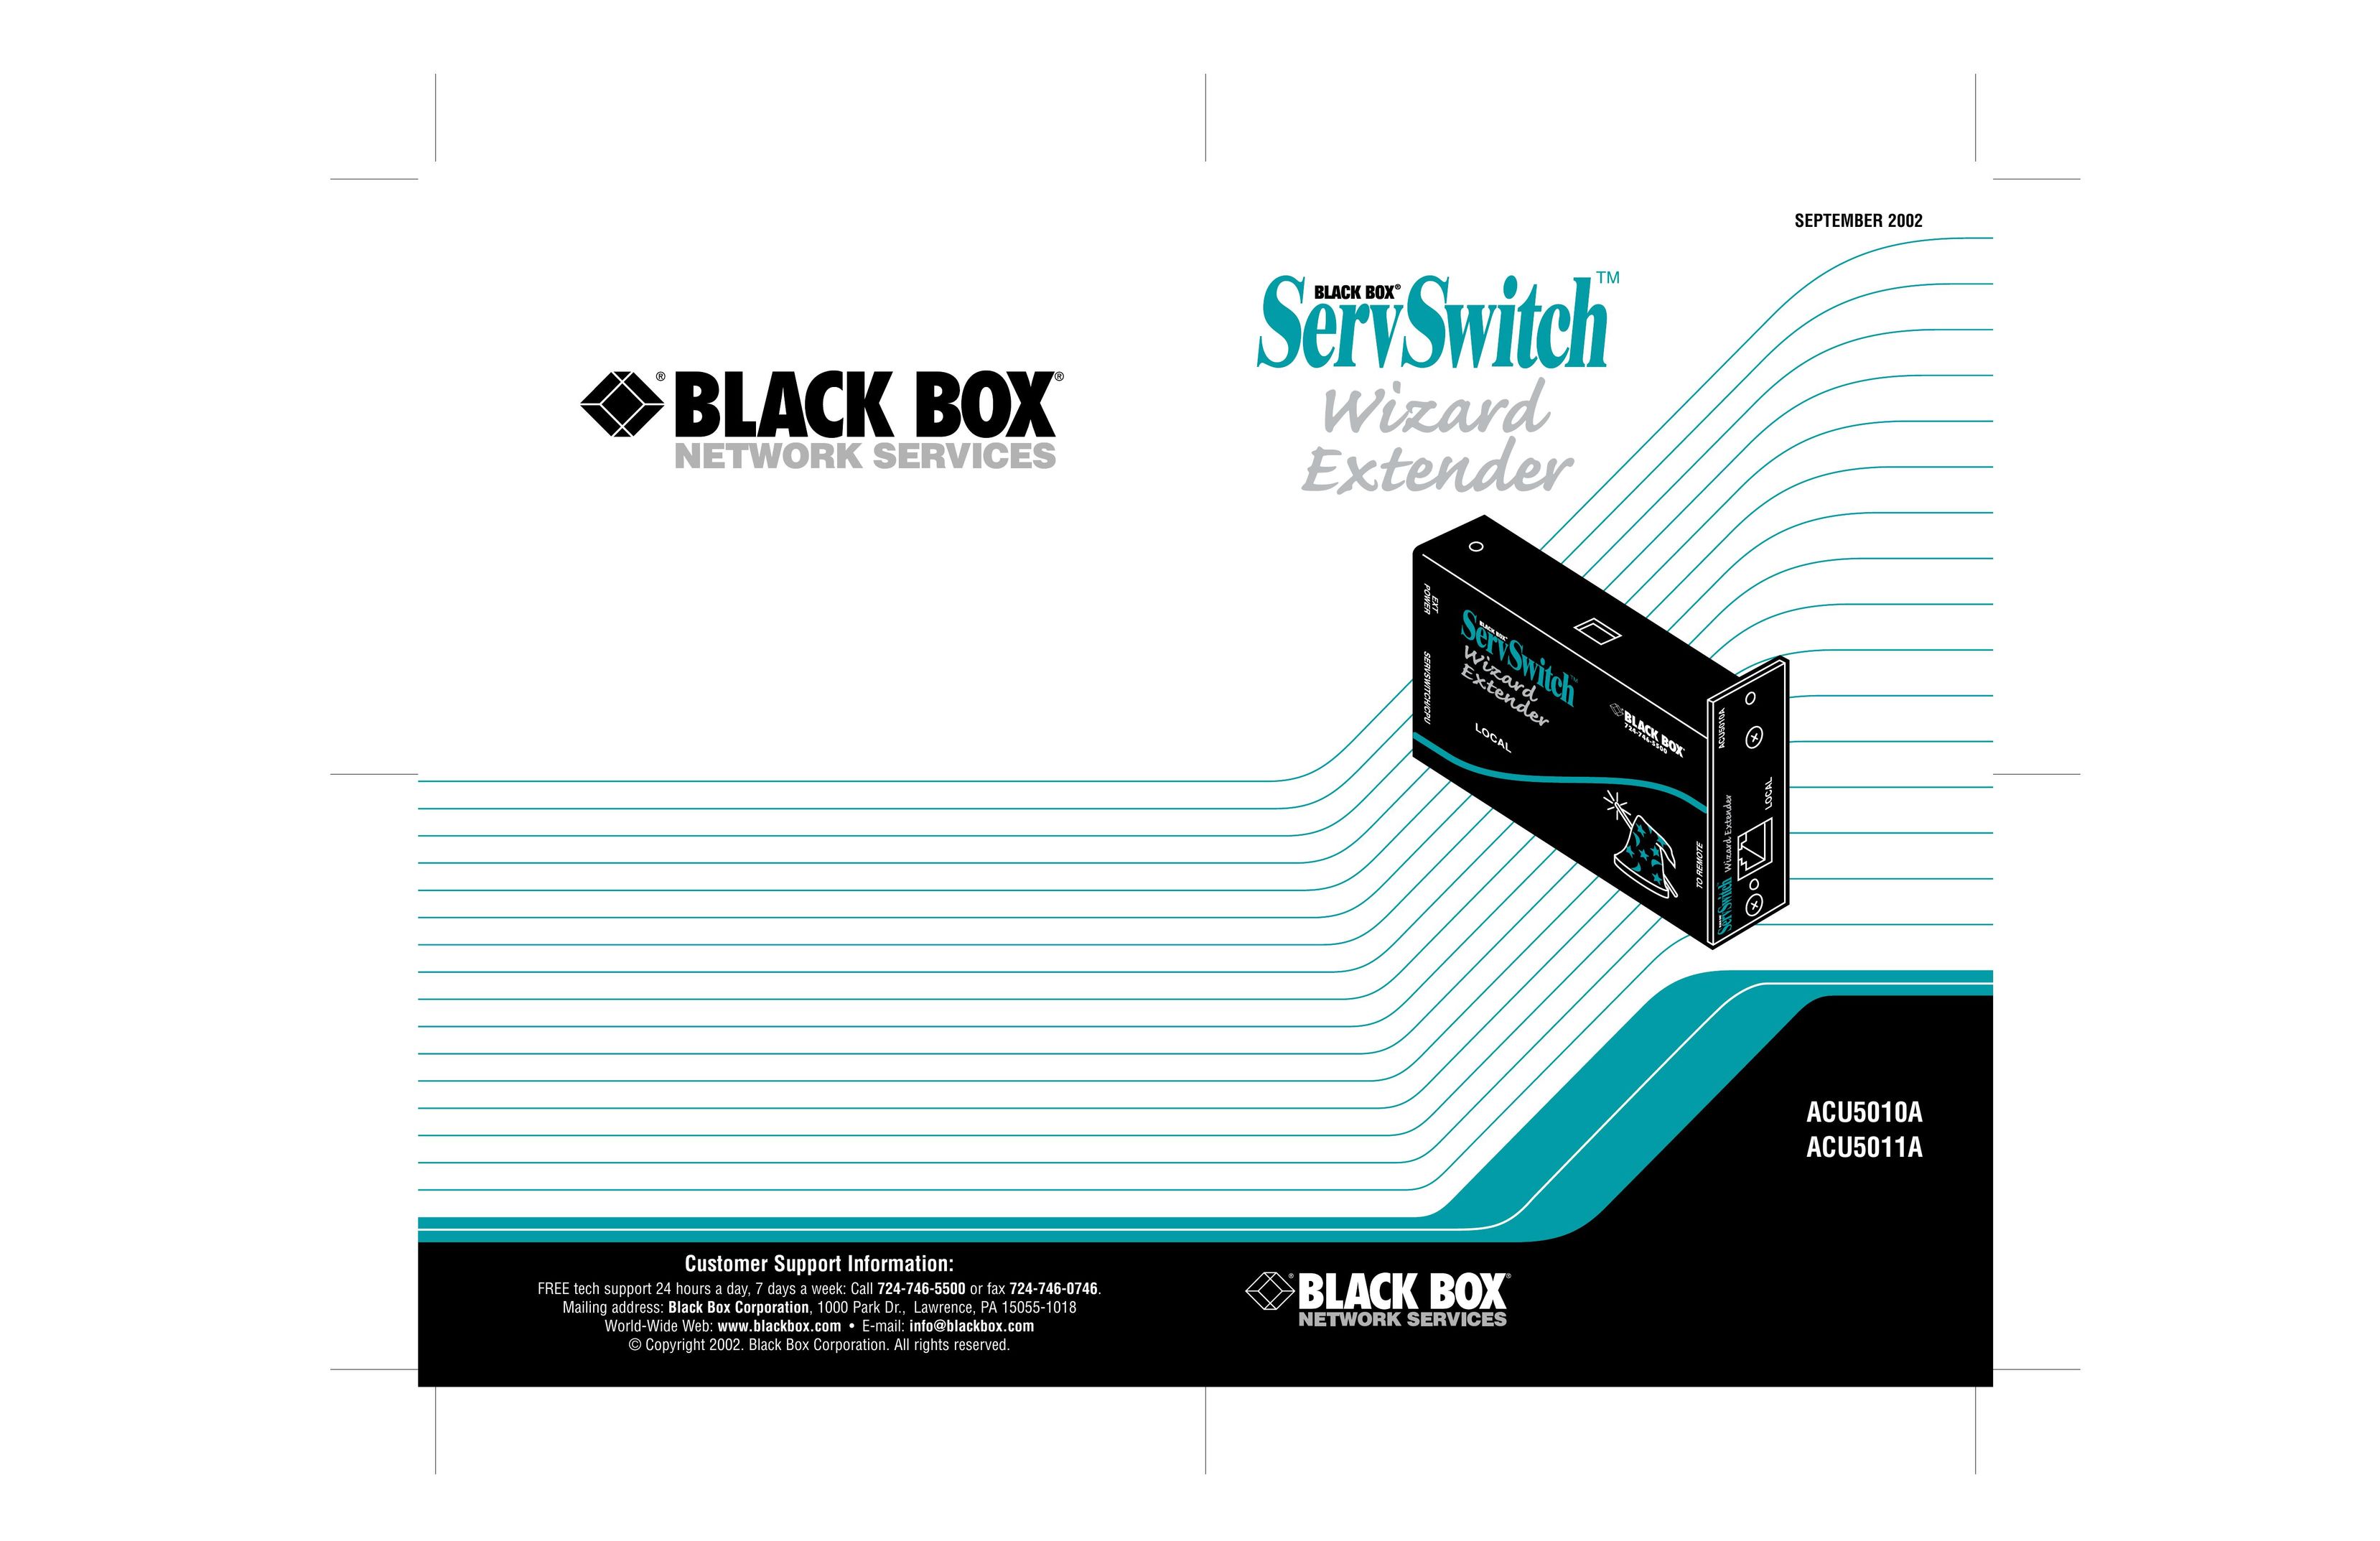 Black Box ACU5010A Network Hardware User Manual